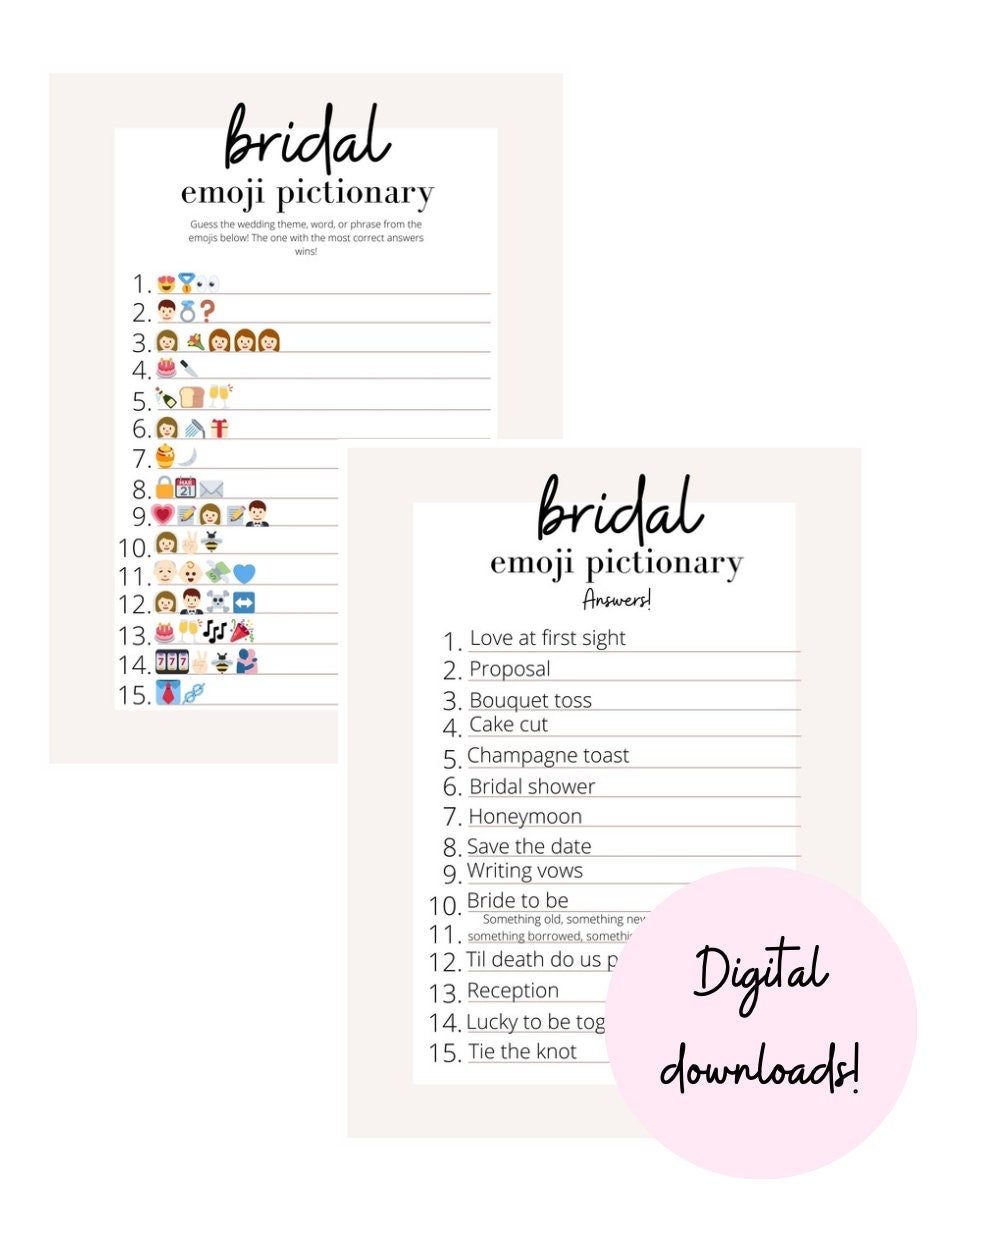 bridal-emoji-pictionary-sites-unimi-it